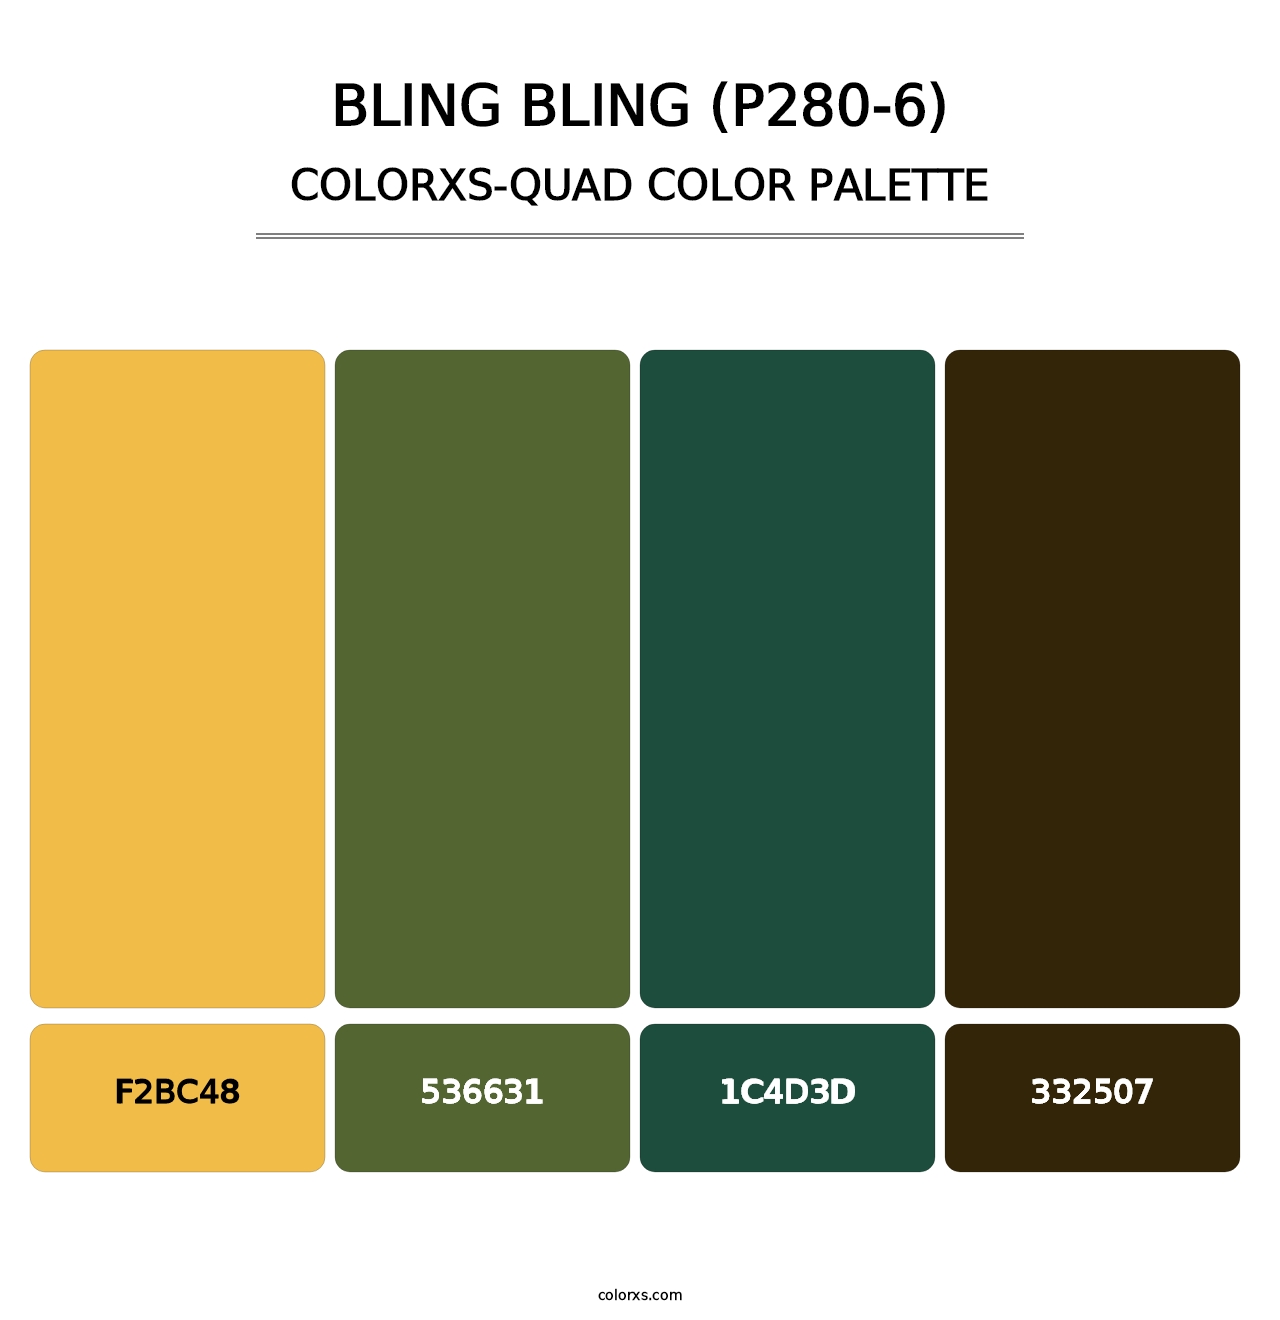 Bling Bling (P280-6) - Colorxs Quad Palette